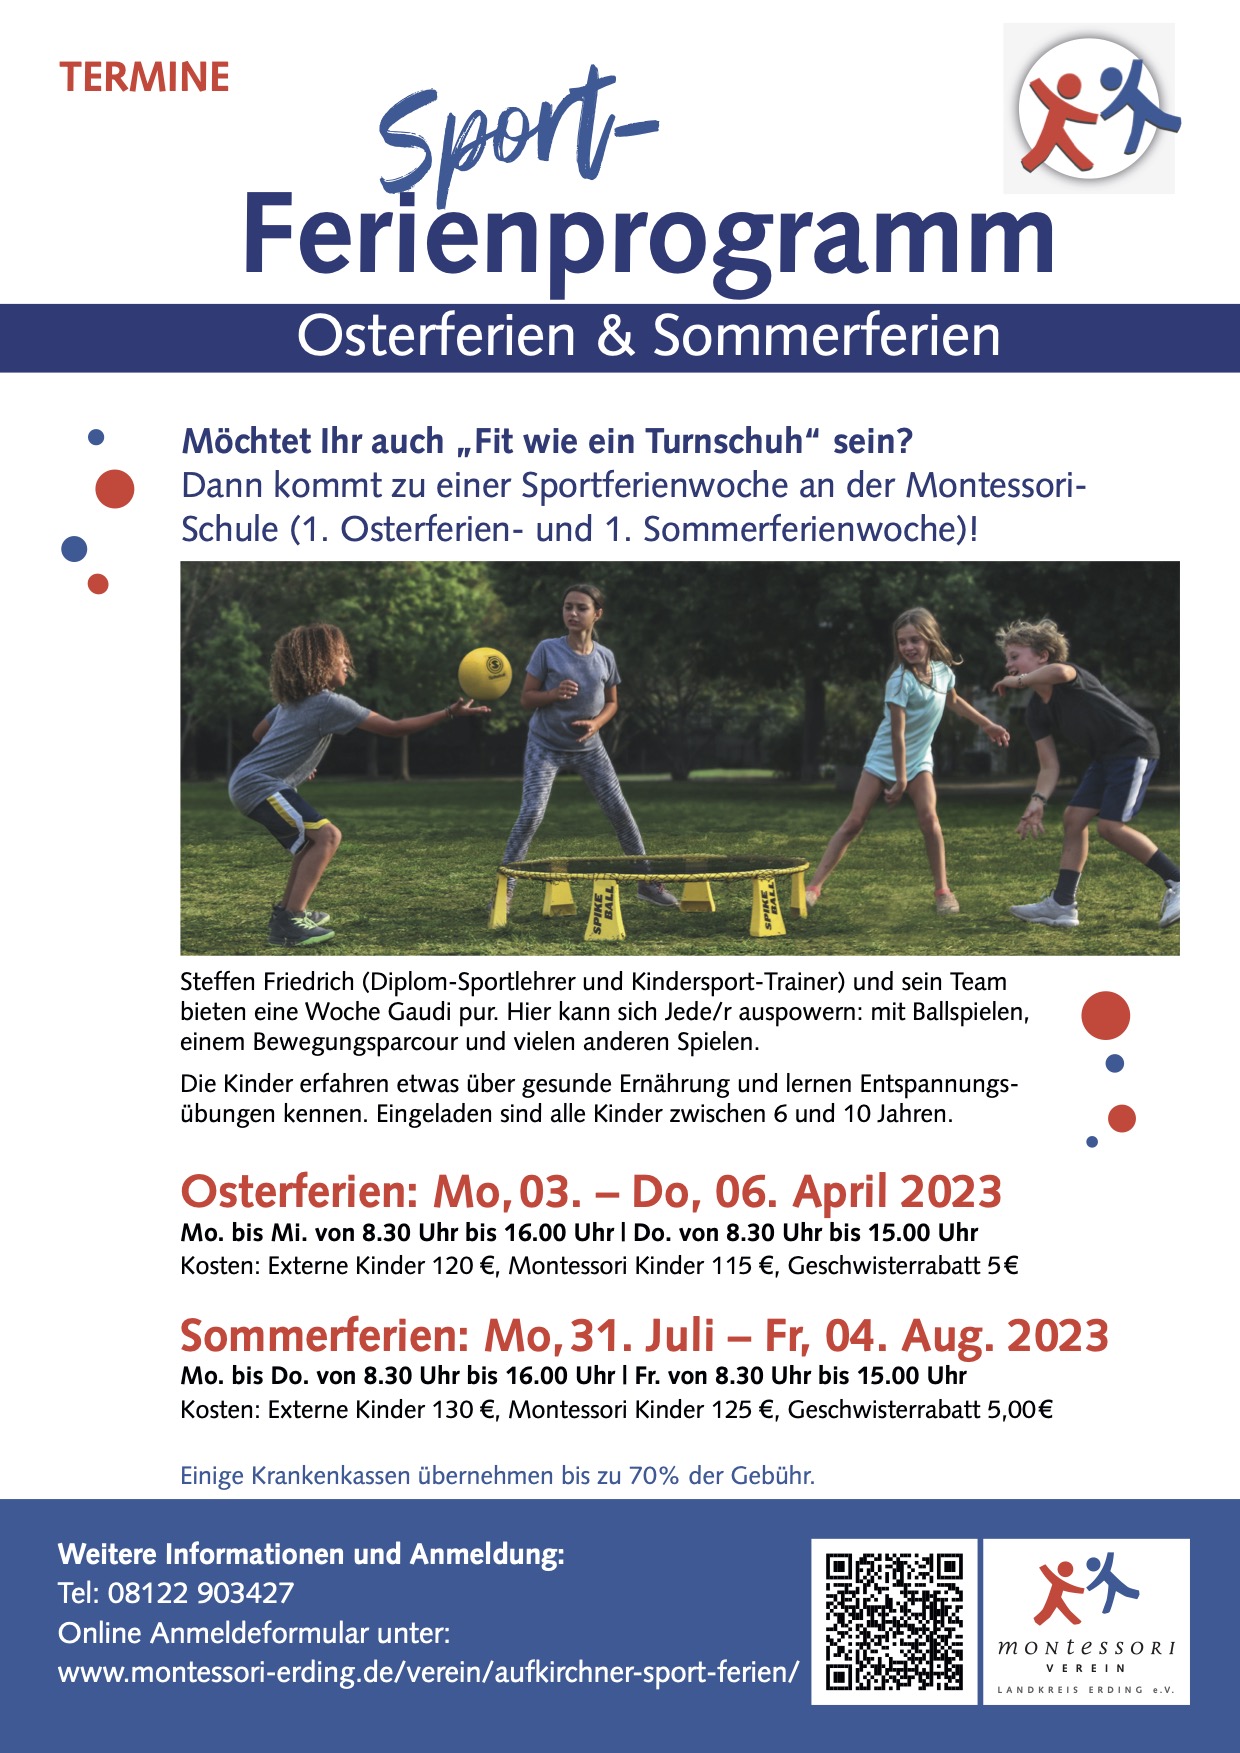 Aufkirchner Sport-Ferienu003c Montessori-Schule Erding